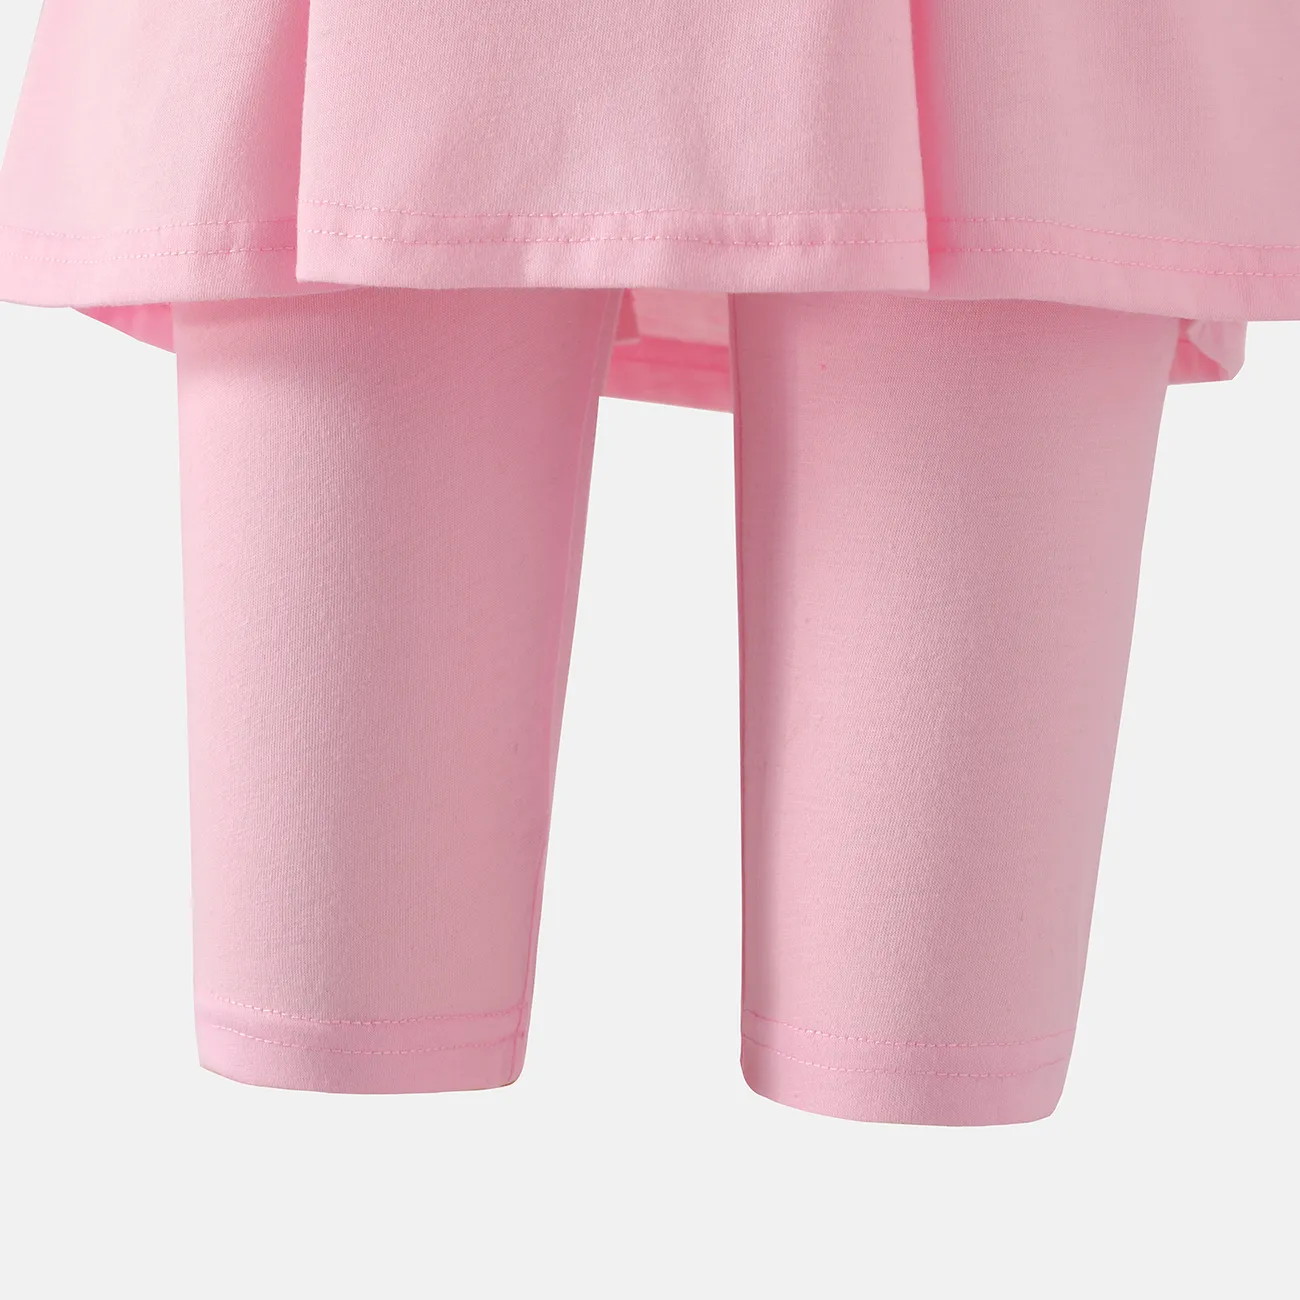 pantaloncini leggings bambina tinta unita finti due gonne Rosa big image 1